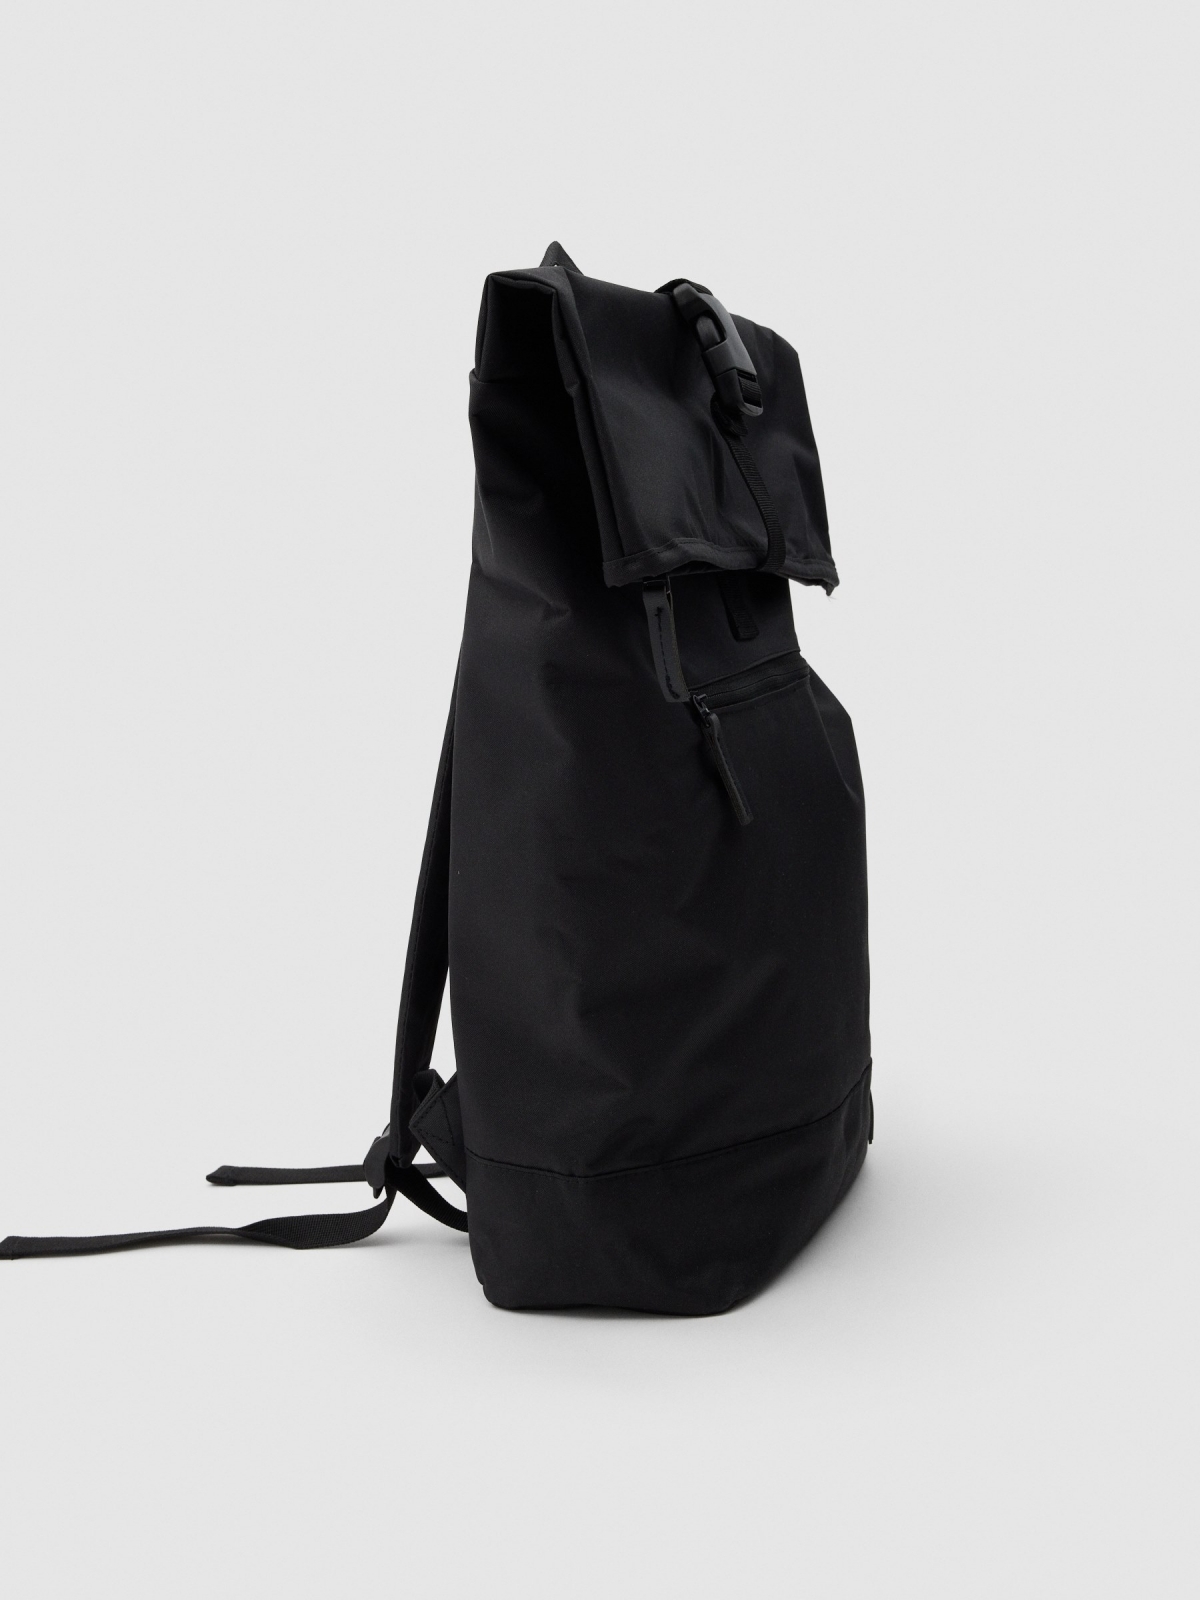 Nylon backpack 45º side view